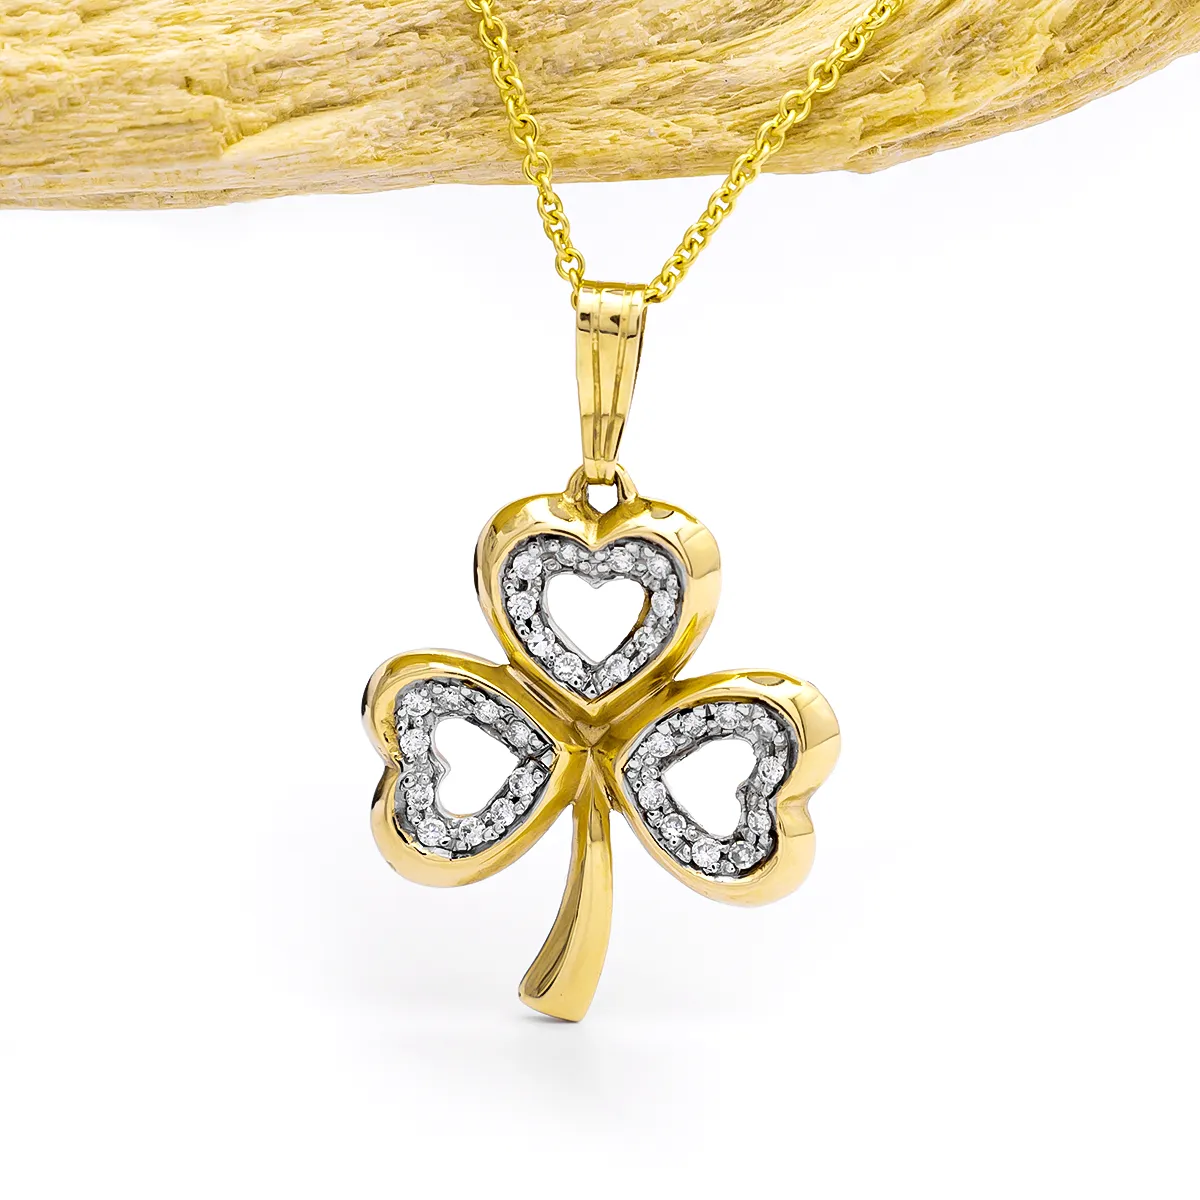 14K Yellow Gold Malachite Four Leaf Clover Necklace, Irish Lucky Charm